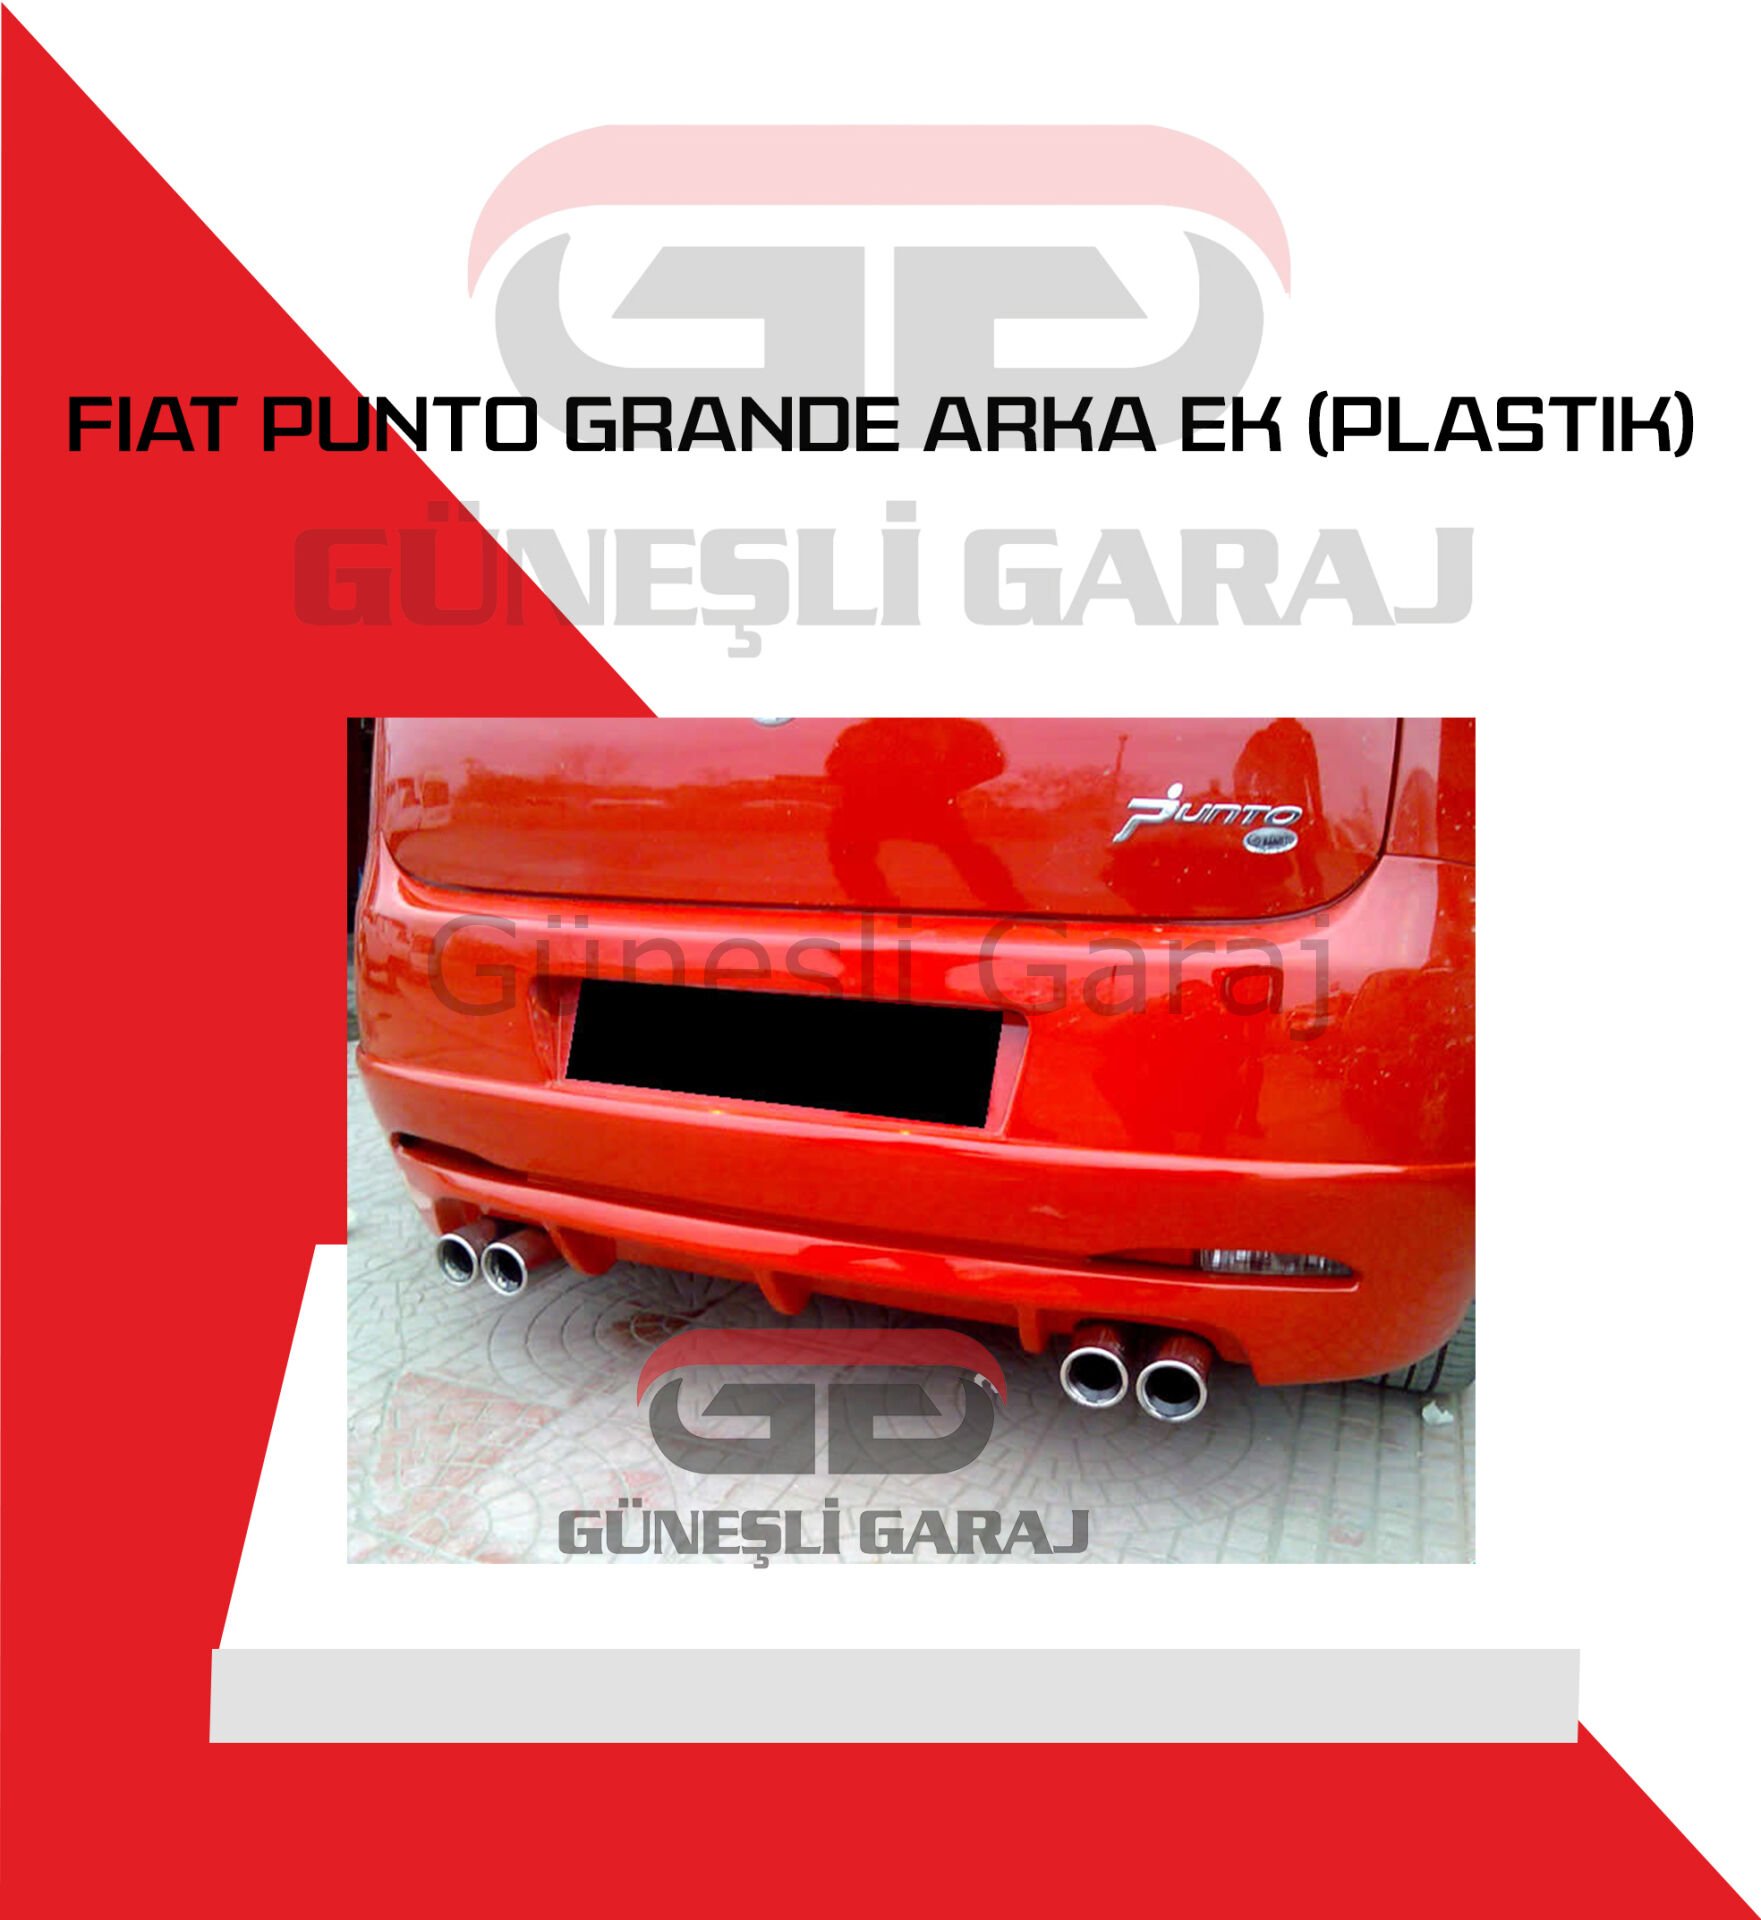 Fiat Punto Grande Arka Ek (Plastik)